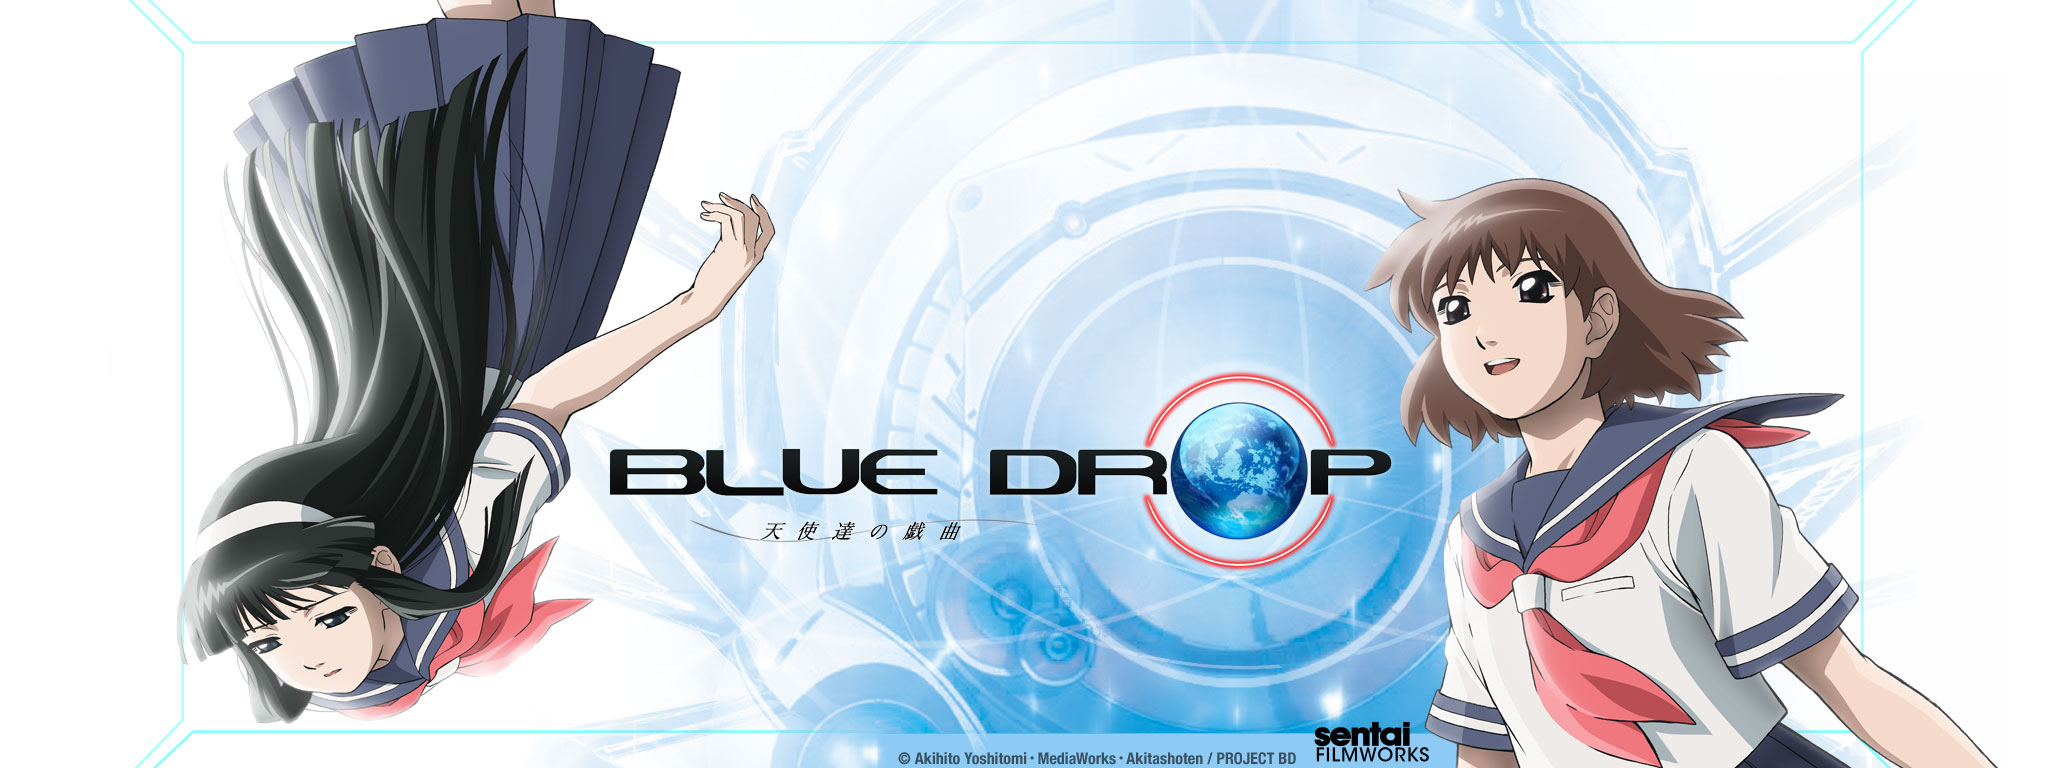 Title Art for Blue Drop